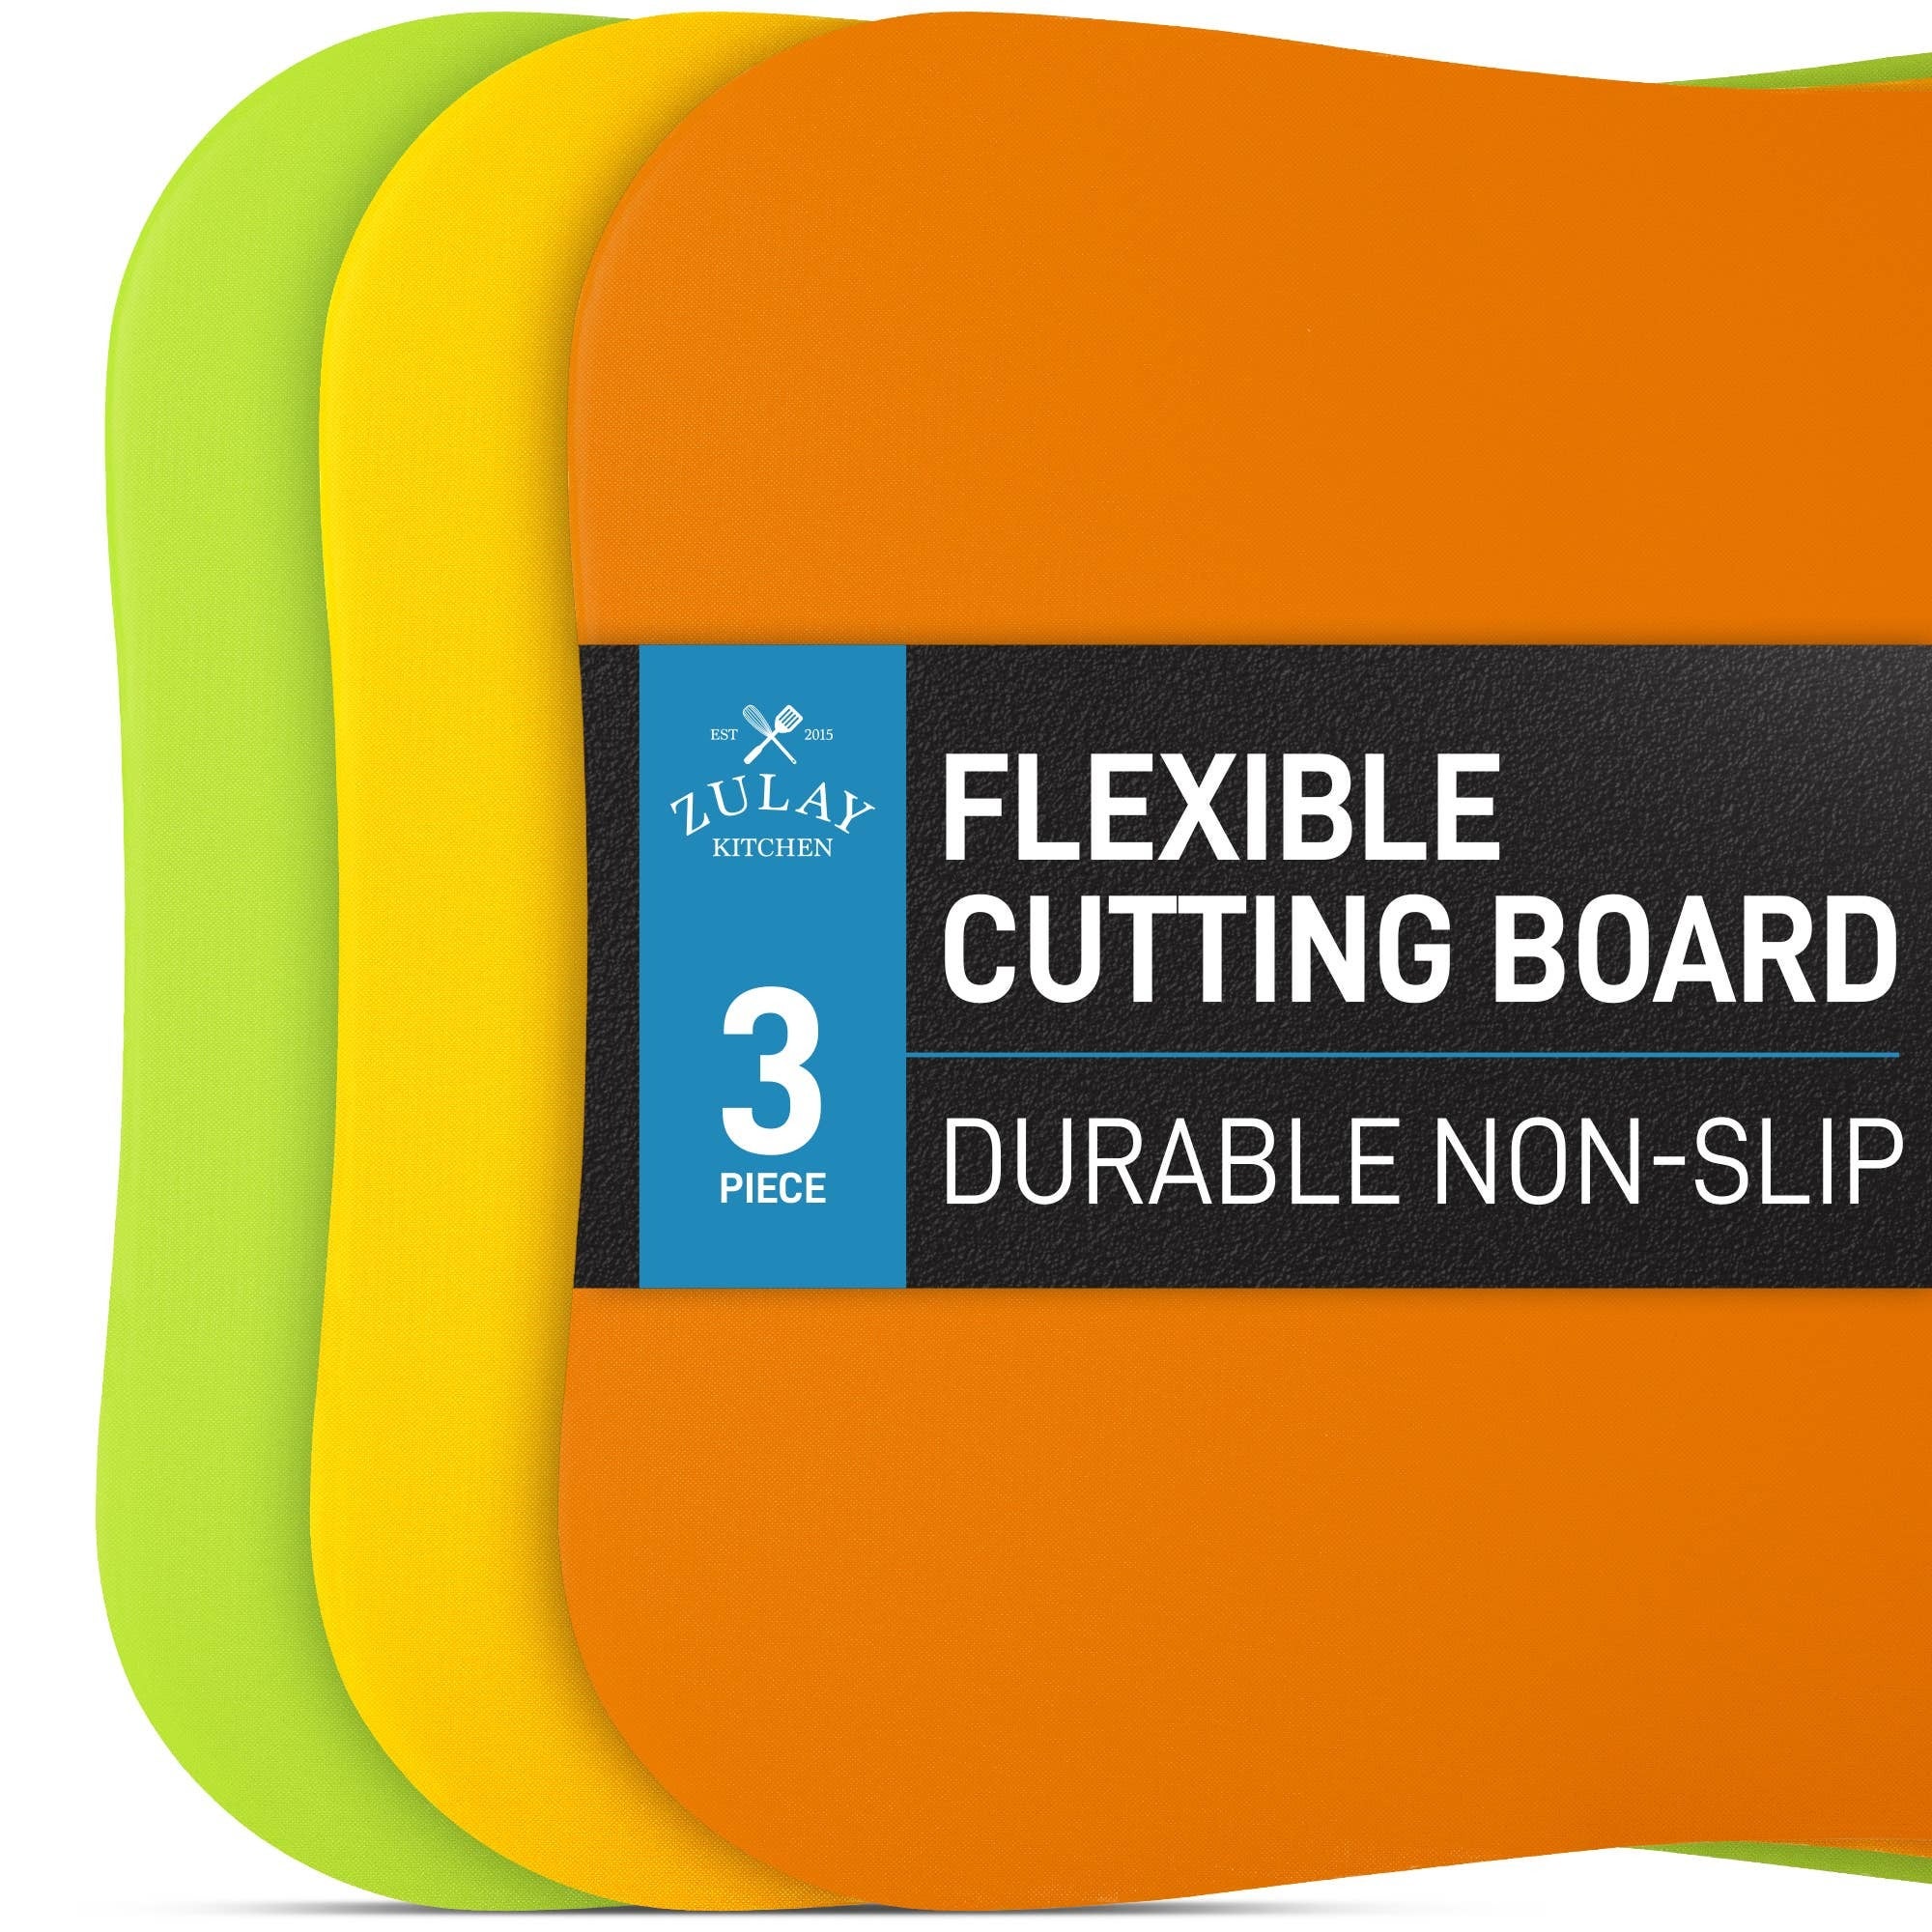 Cutting Board Mats Curved Edge -3 Boards  McKenzie Place 802 Paul Bunyan  Dr S Suite 5 Bemidji, MN 56601 218-755-8009